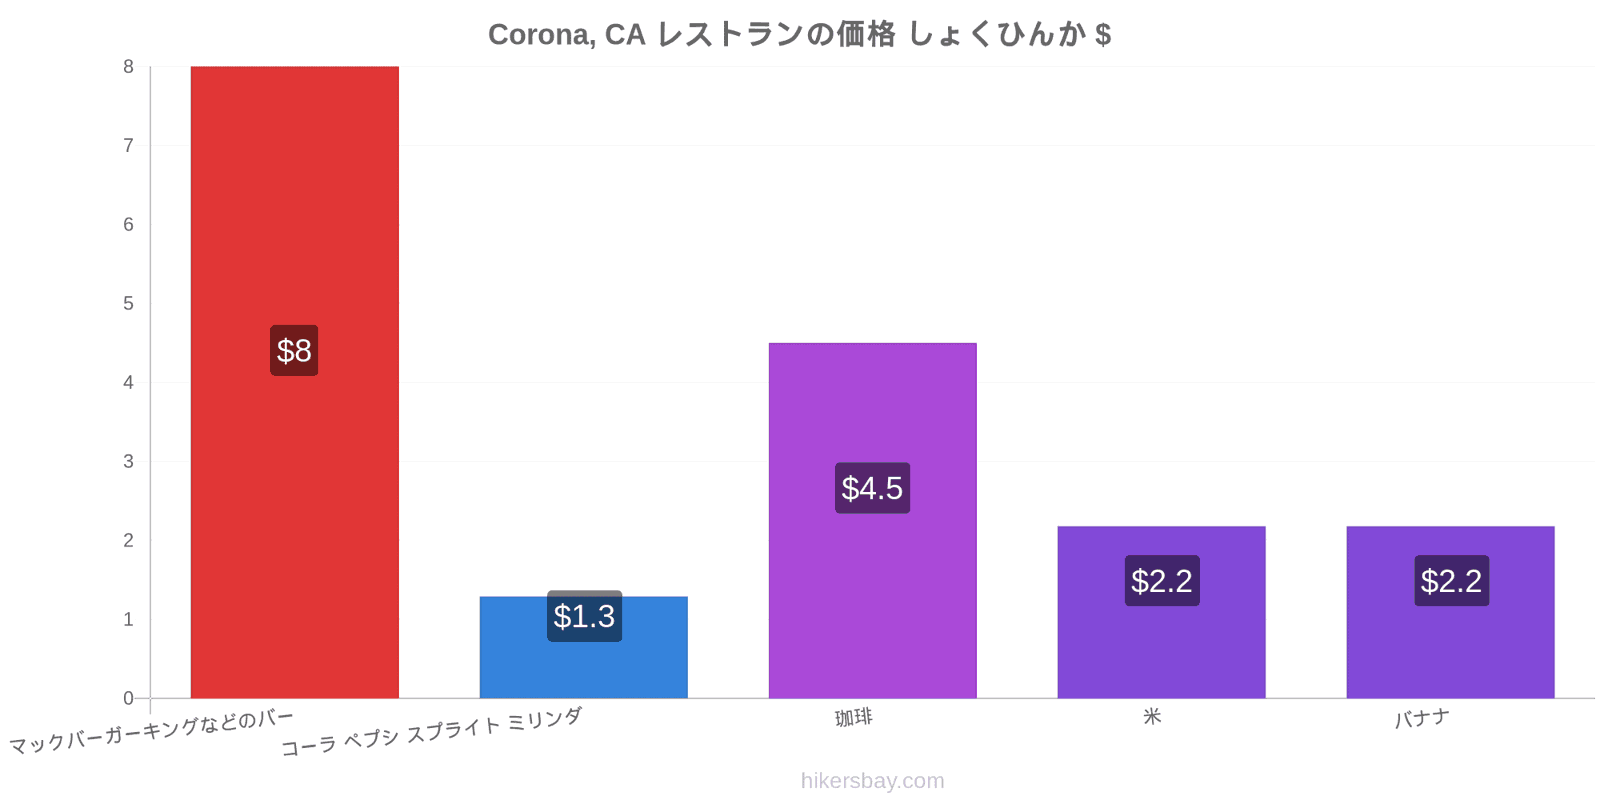 Corona, CA 価格の変更 hikersbay.com